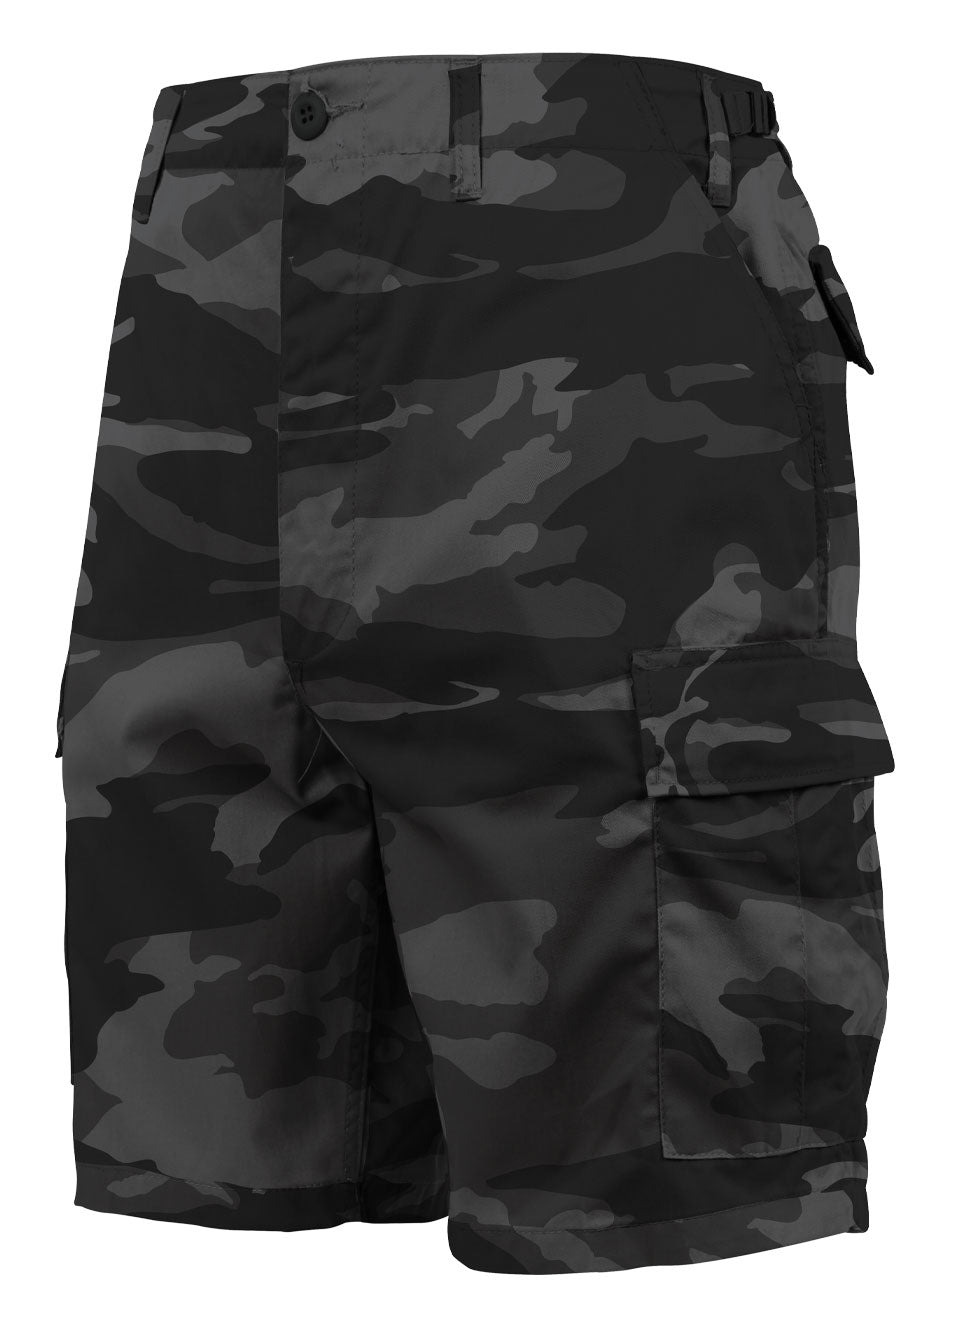 Camouflage Black Shorts for Men for sale